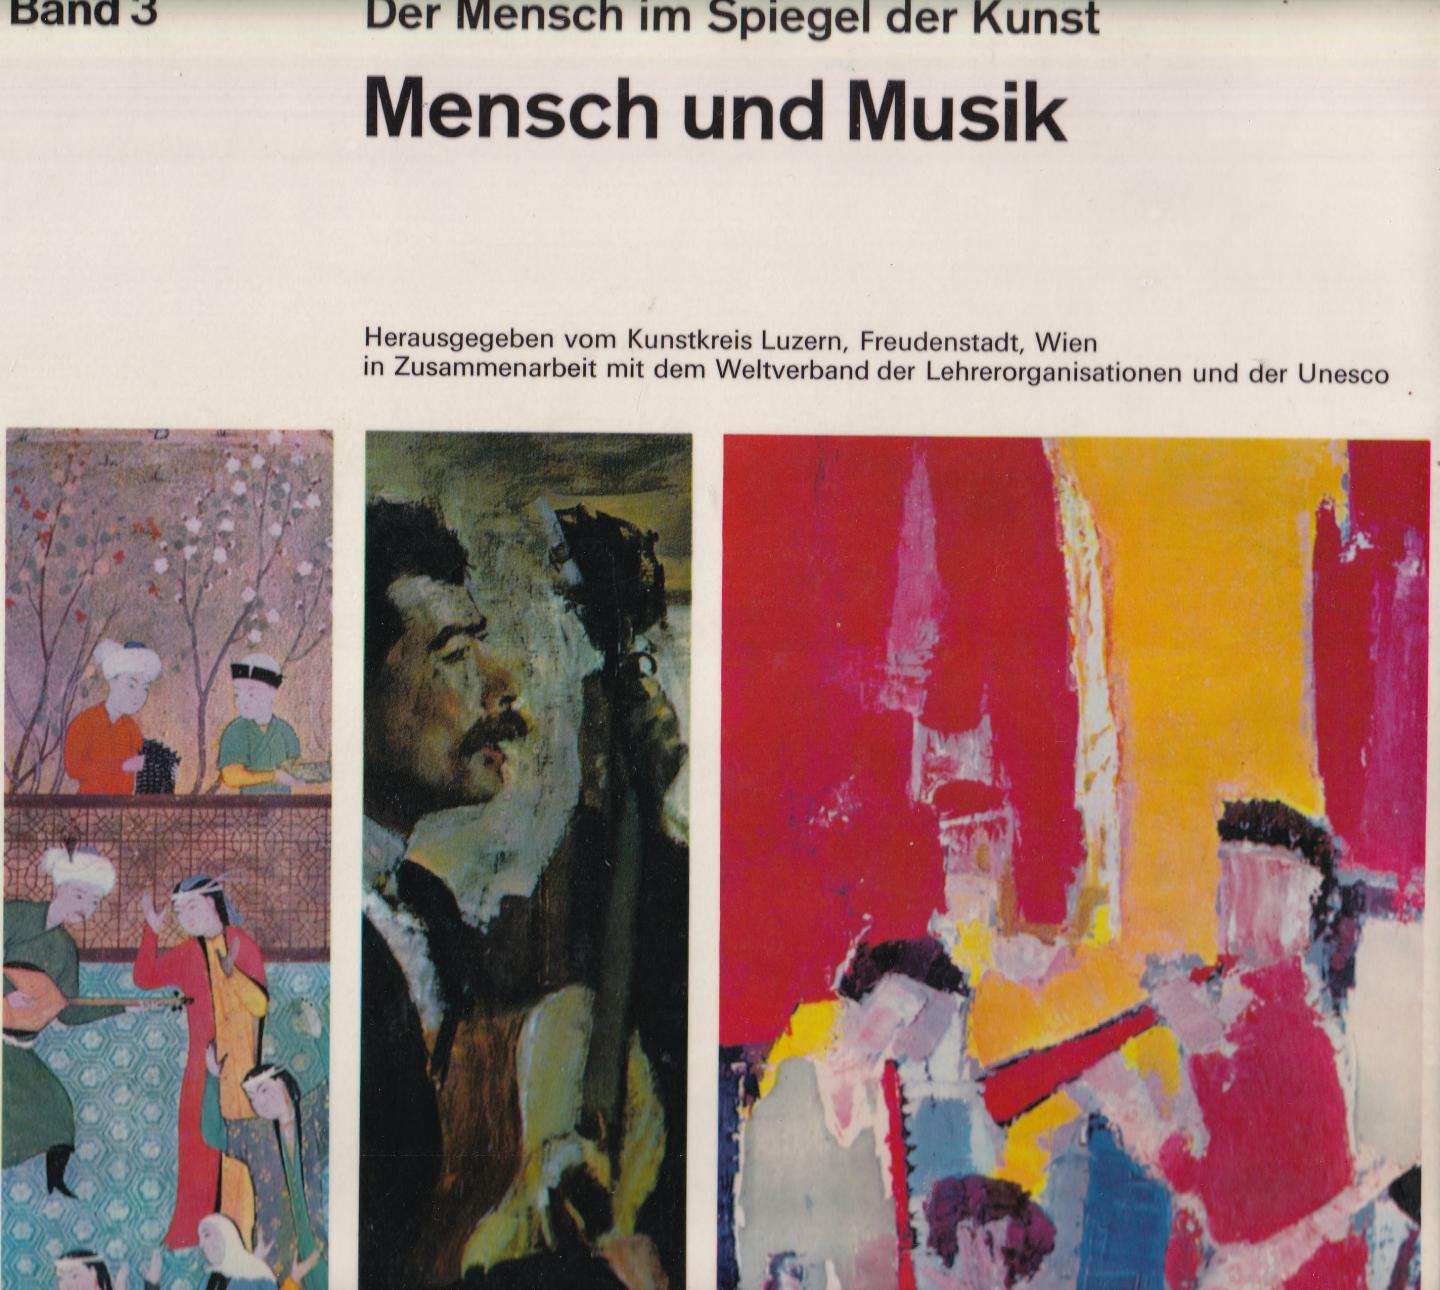 de Silva, A. e.a. (ds1246) - Der Mensch im Spiegel der Kunst/ Mensch und Musik, Band 3